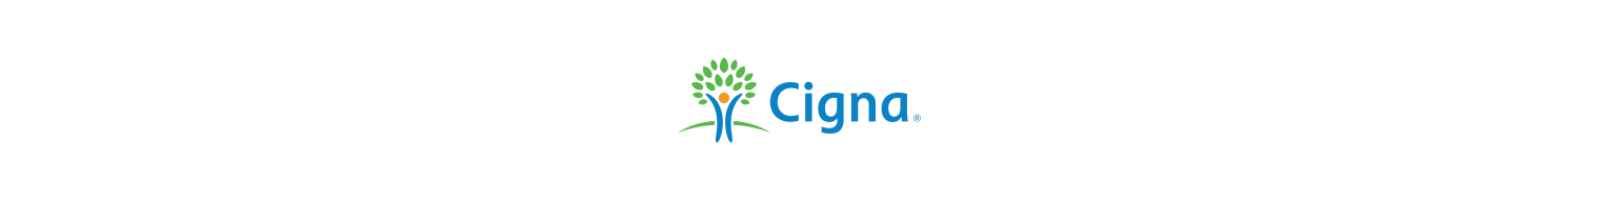 insurance partners at regis medical gp clinic - Cigna